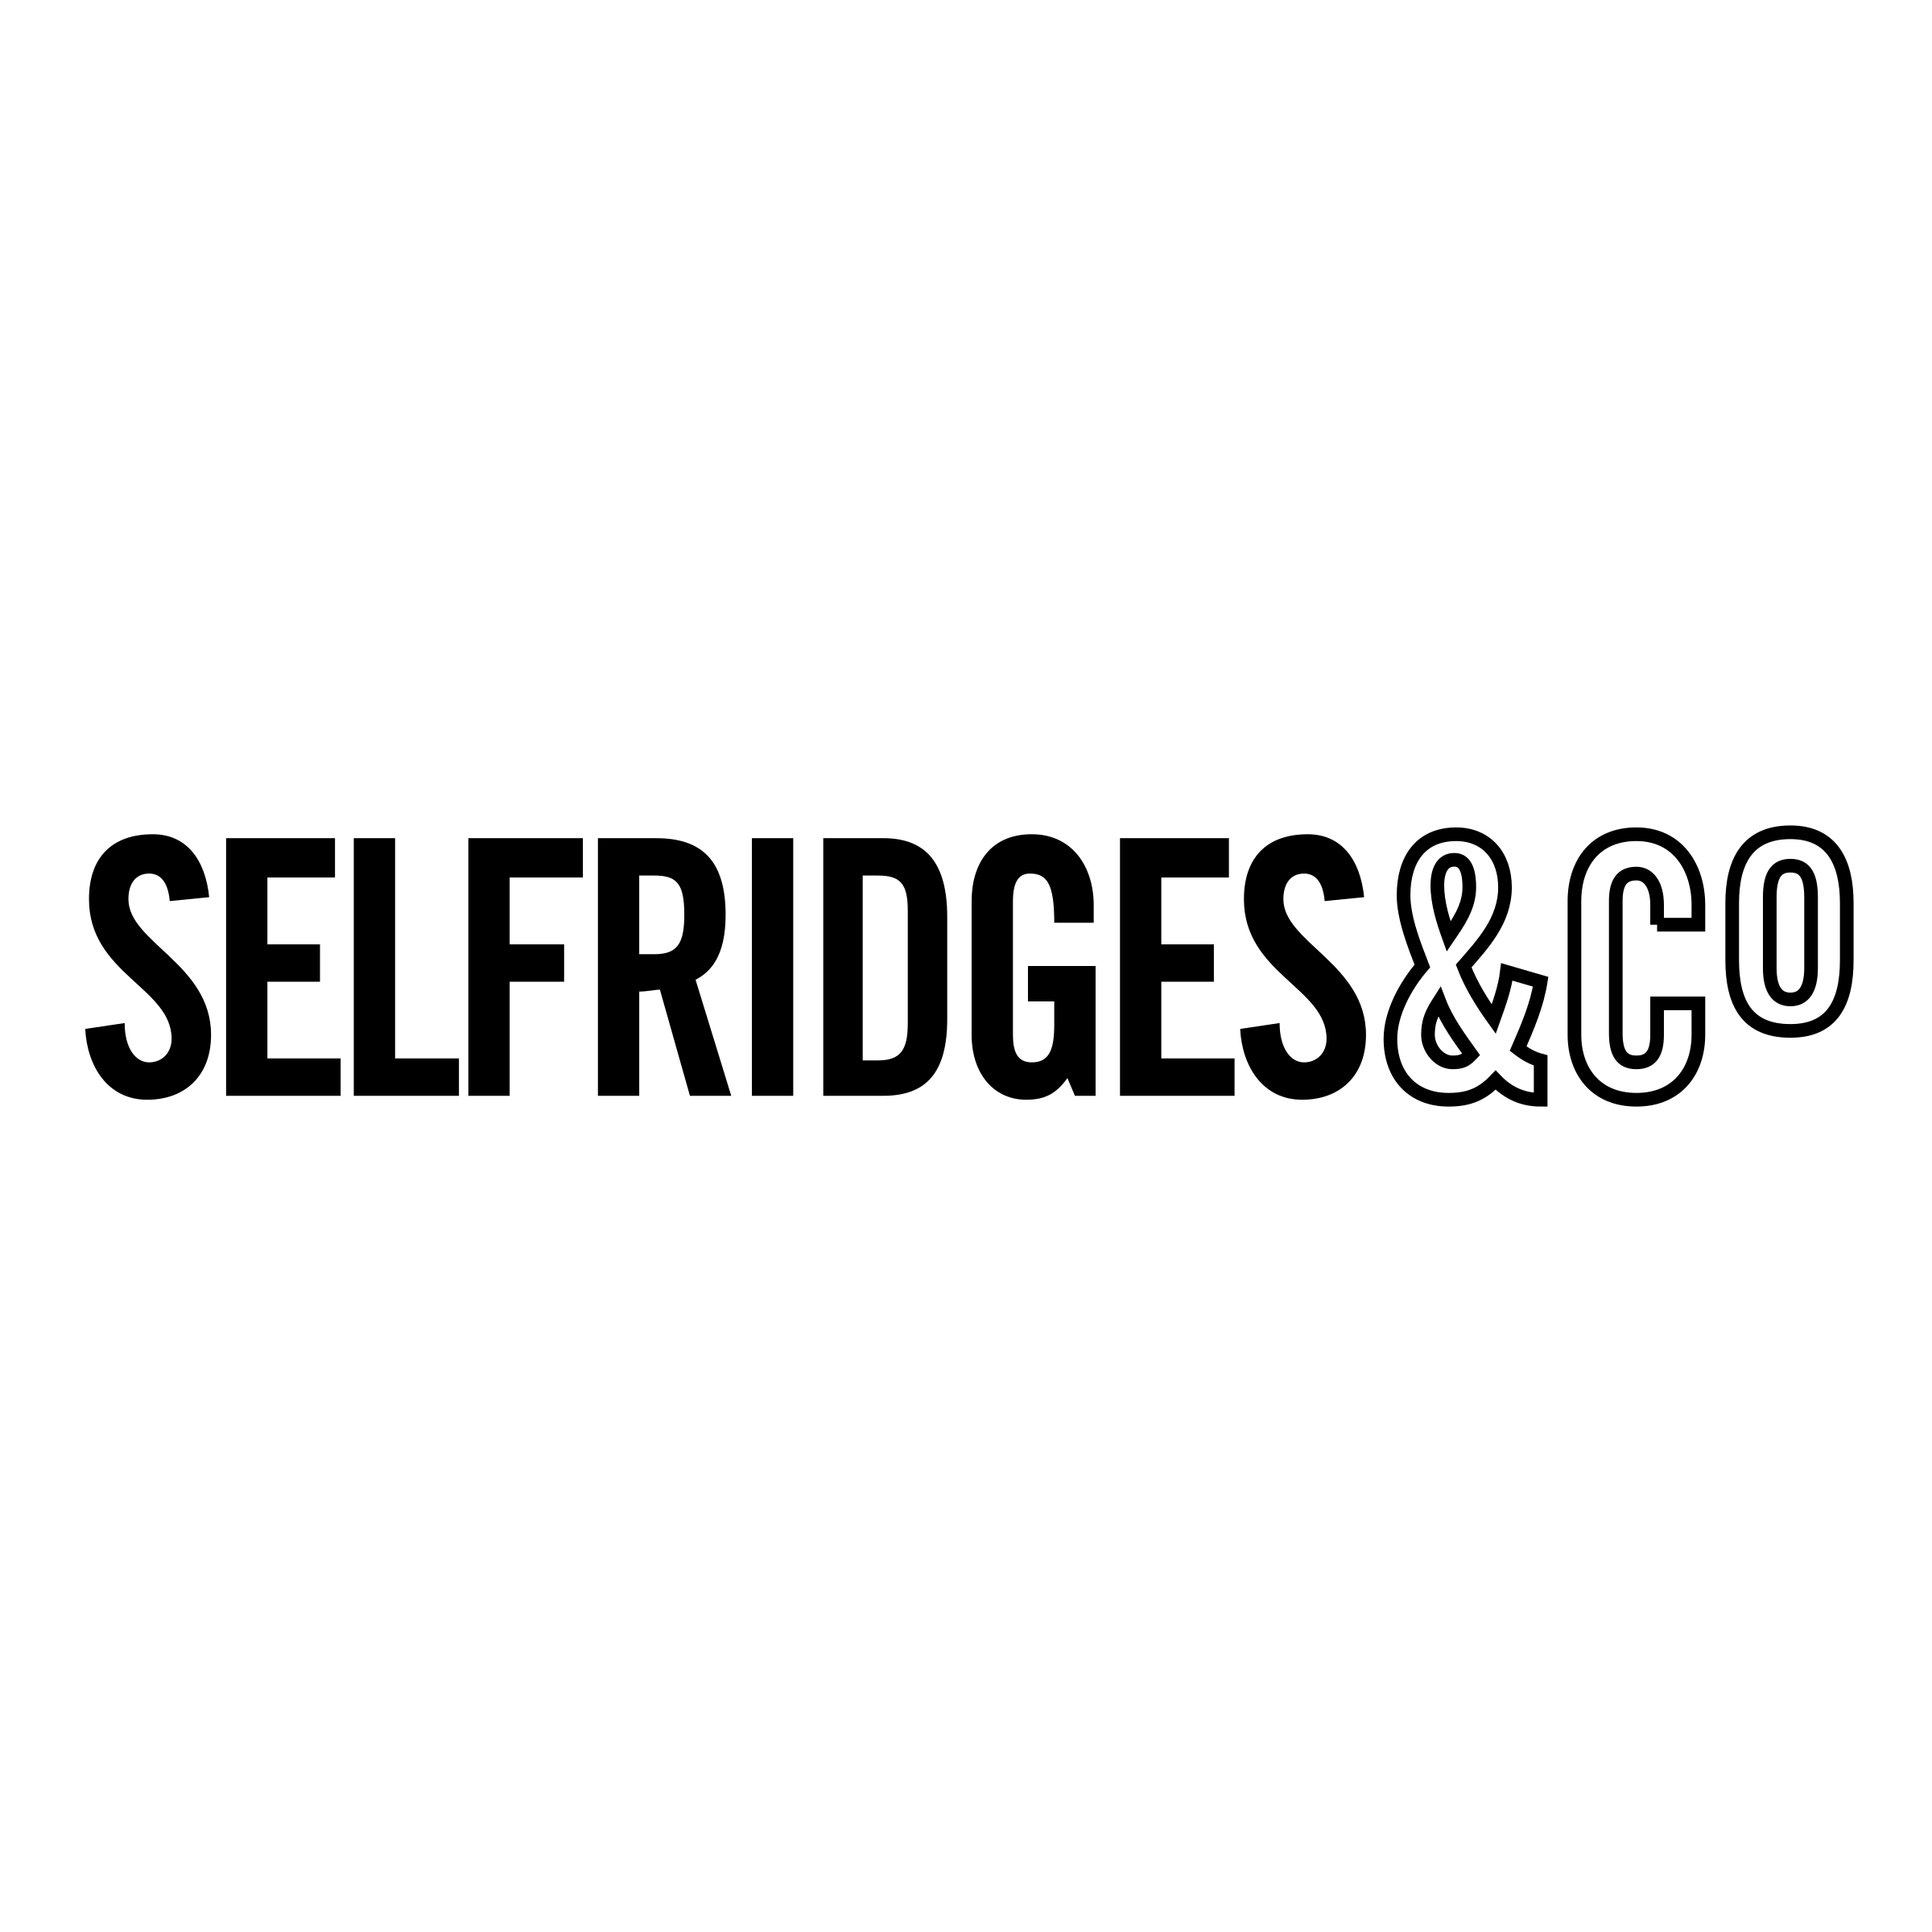 selfridges-co-1-logo-black-and-white.png